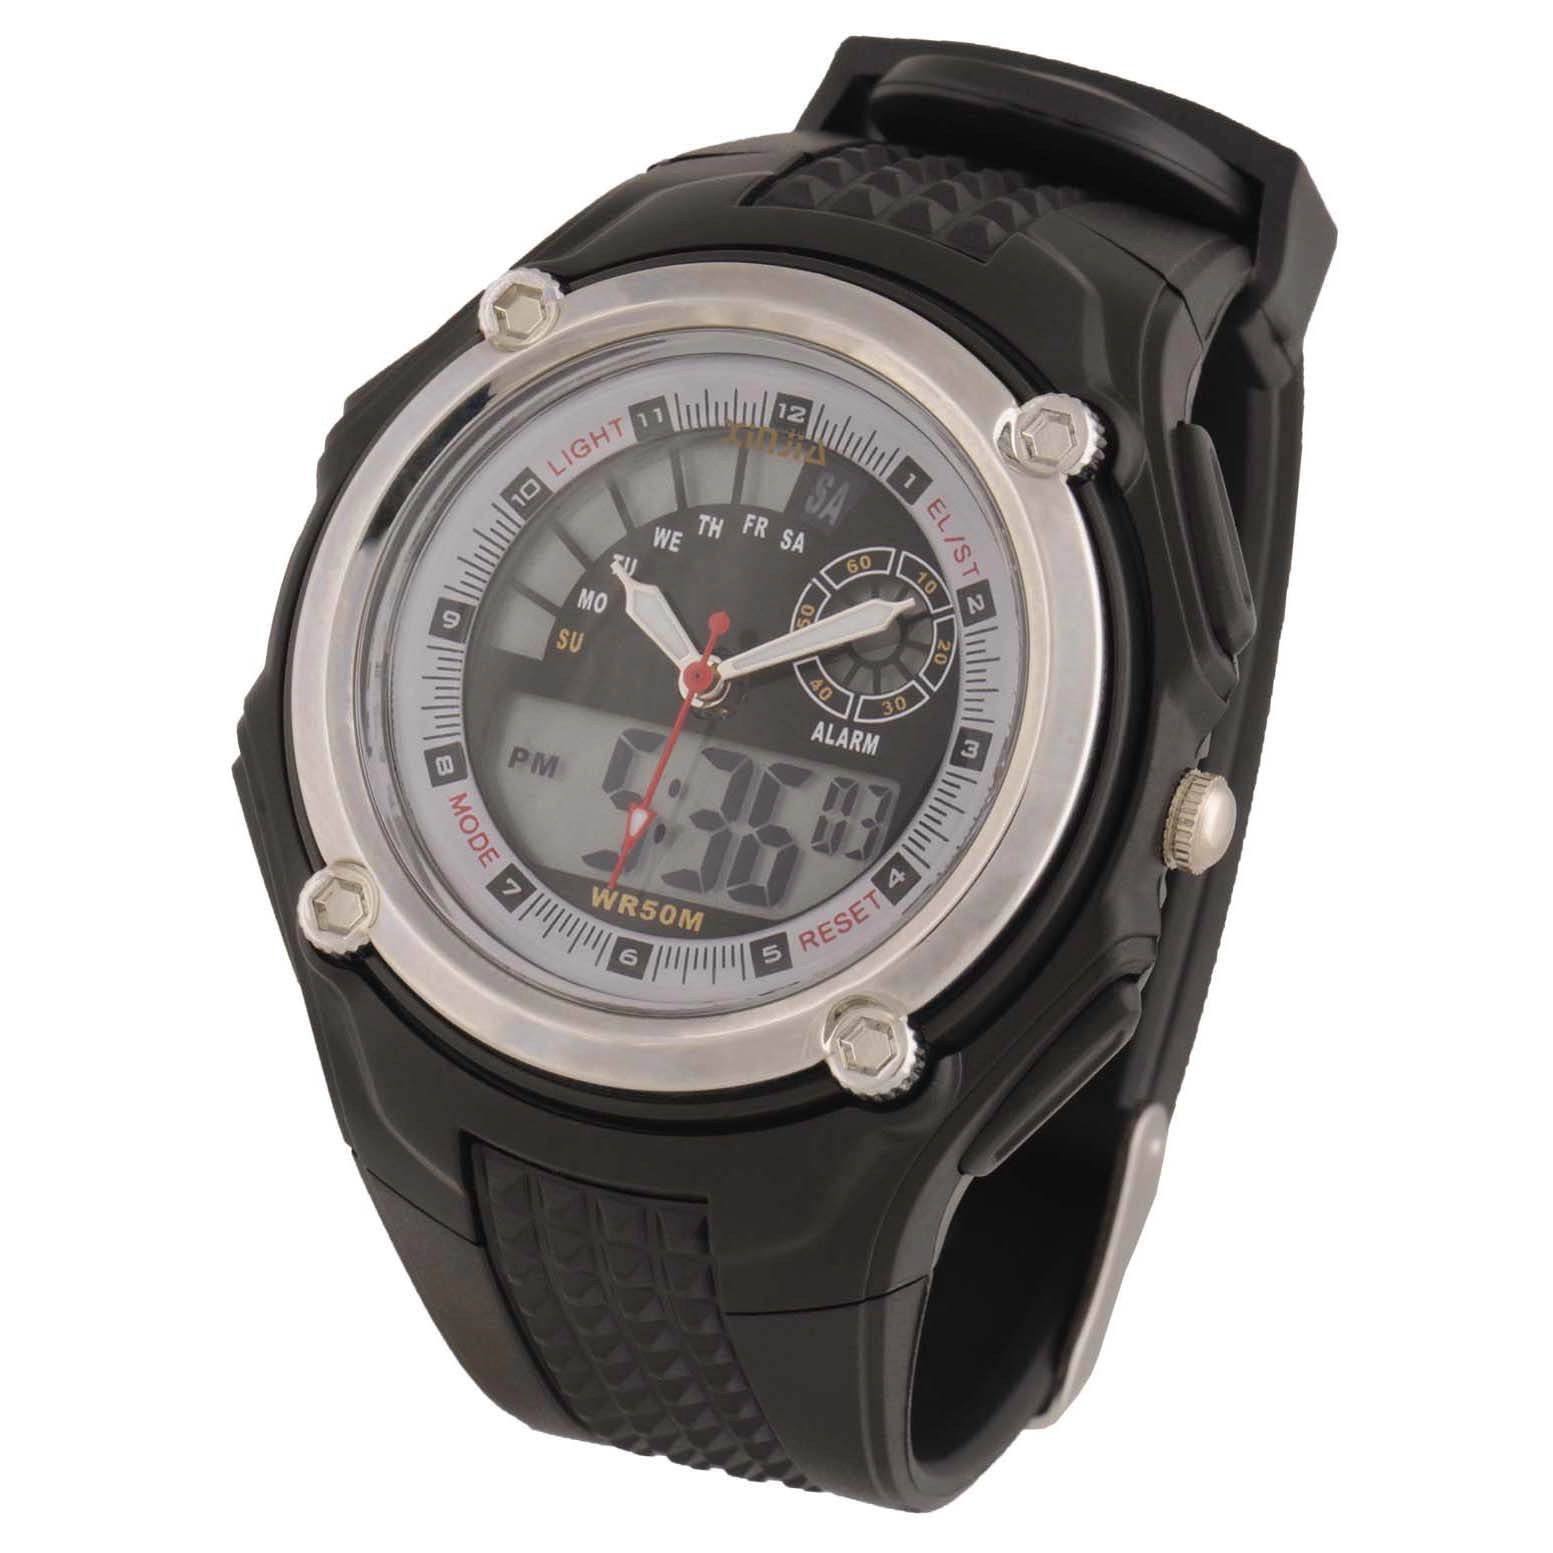 Dual Time Display Water Resistant Wrist Watch